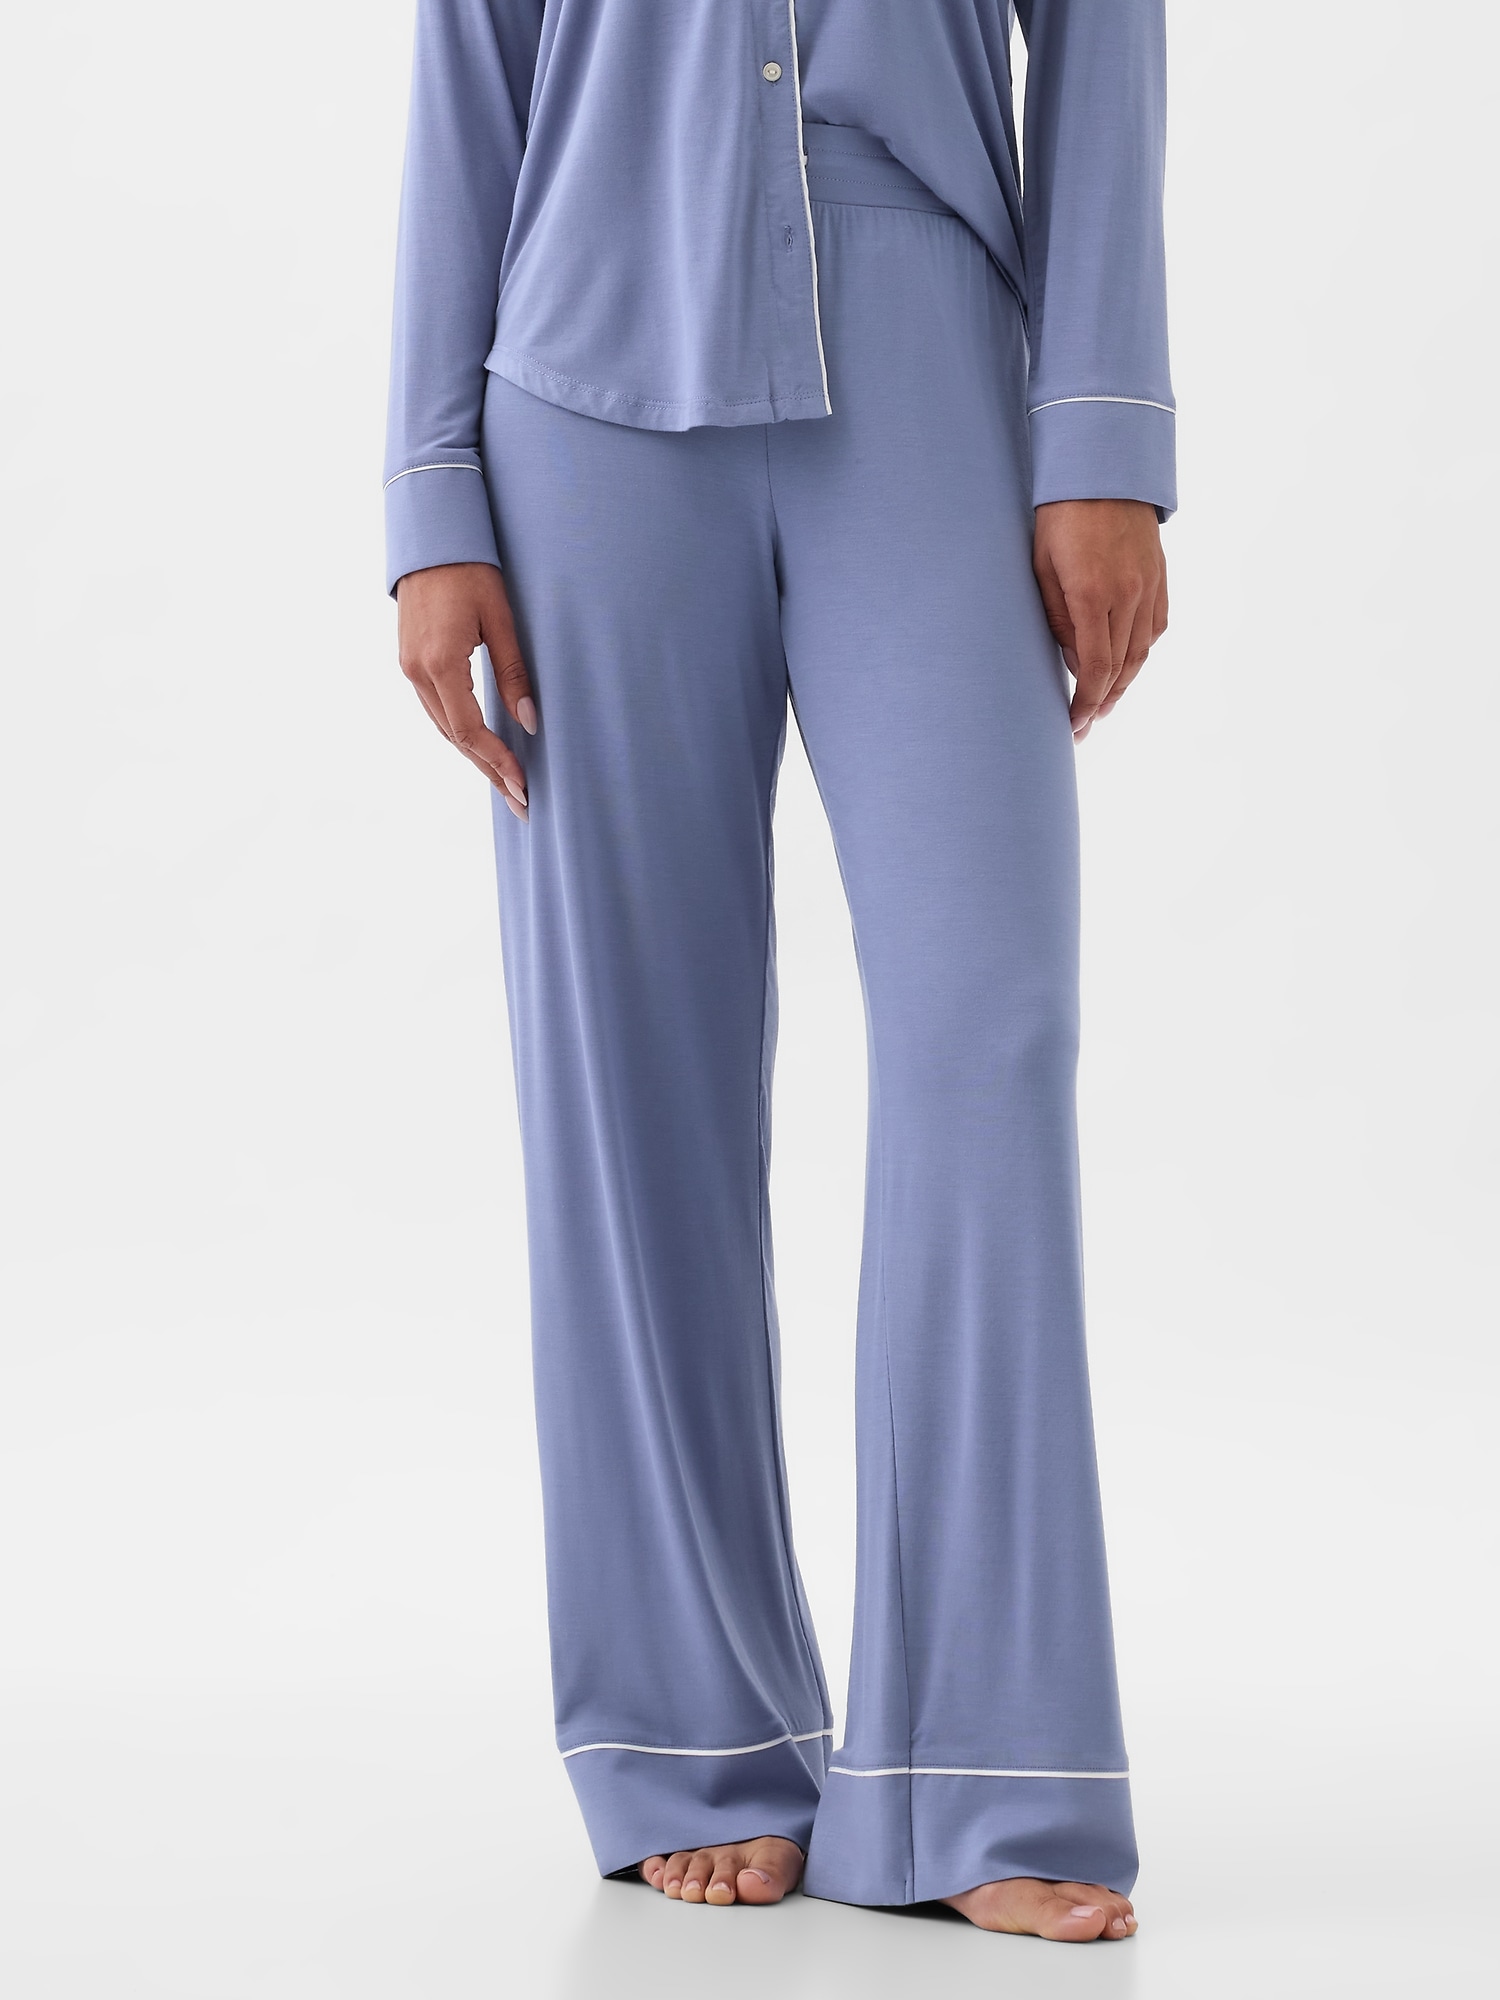 EXTRA LONG Lounge Pants Pyjama PJ Bottoms Black Navy Grey Floral Tall Size  S M L